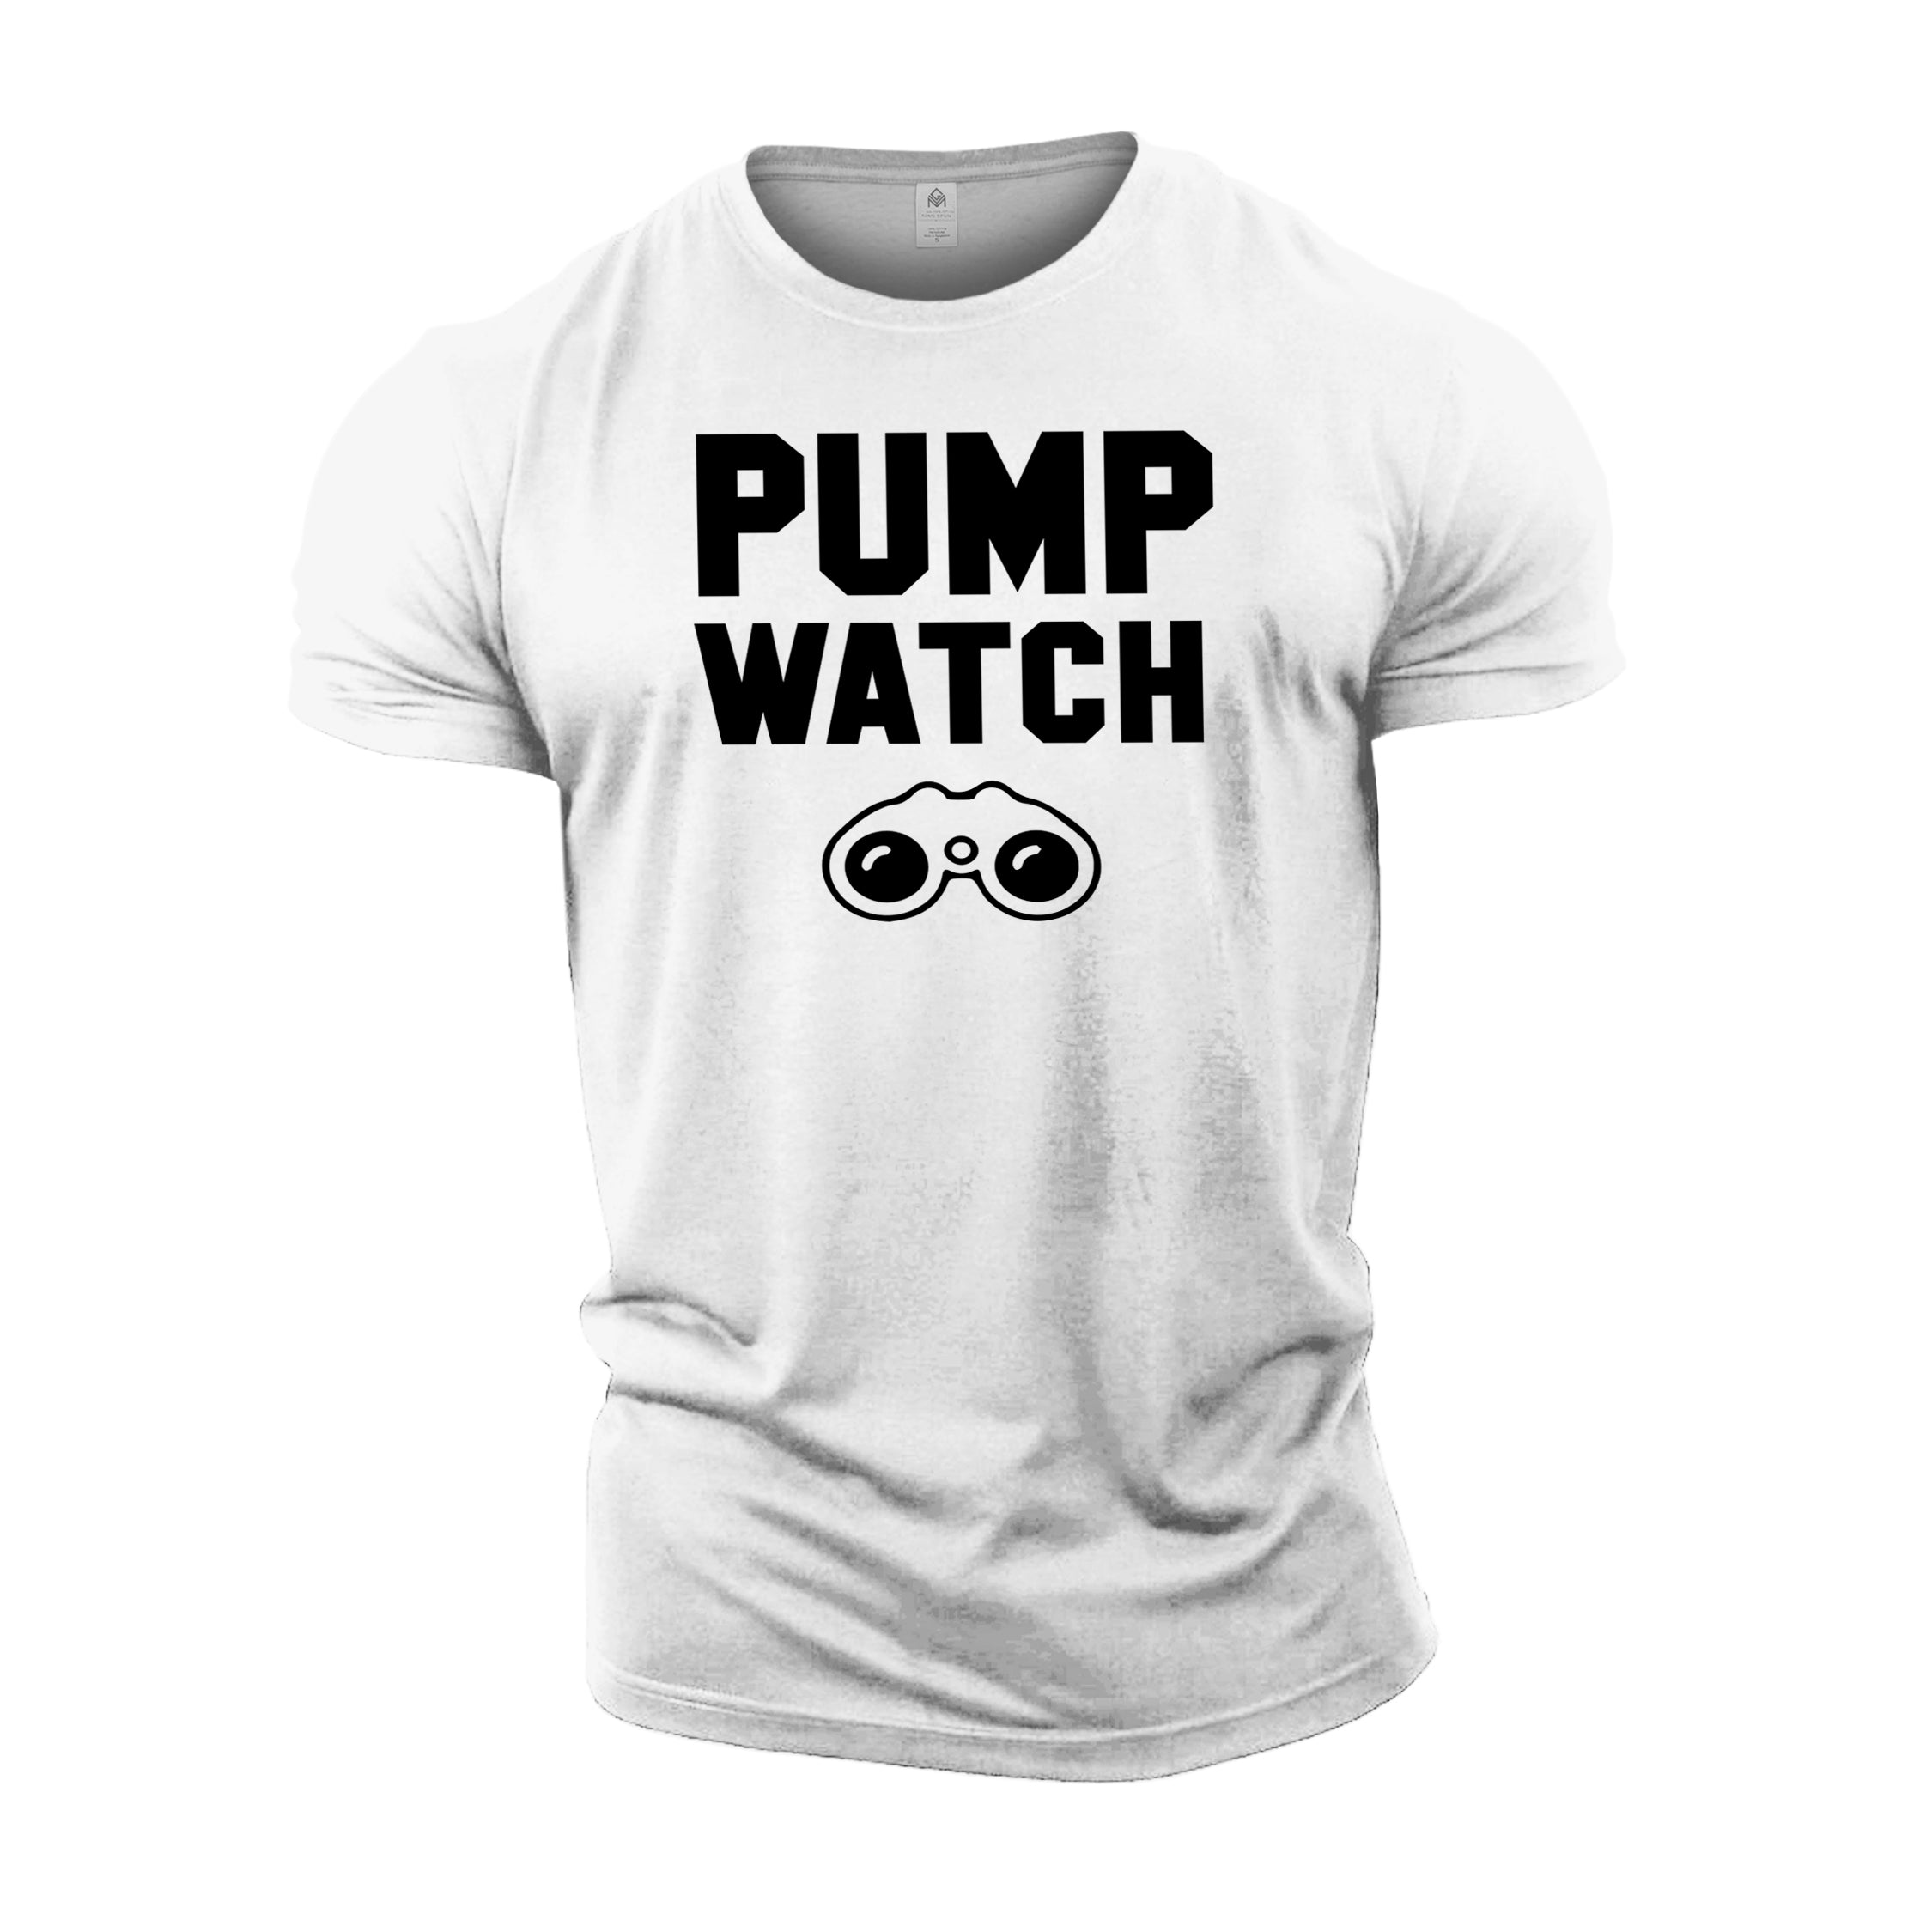 Pump Watch - Gym T-Shirt